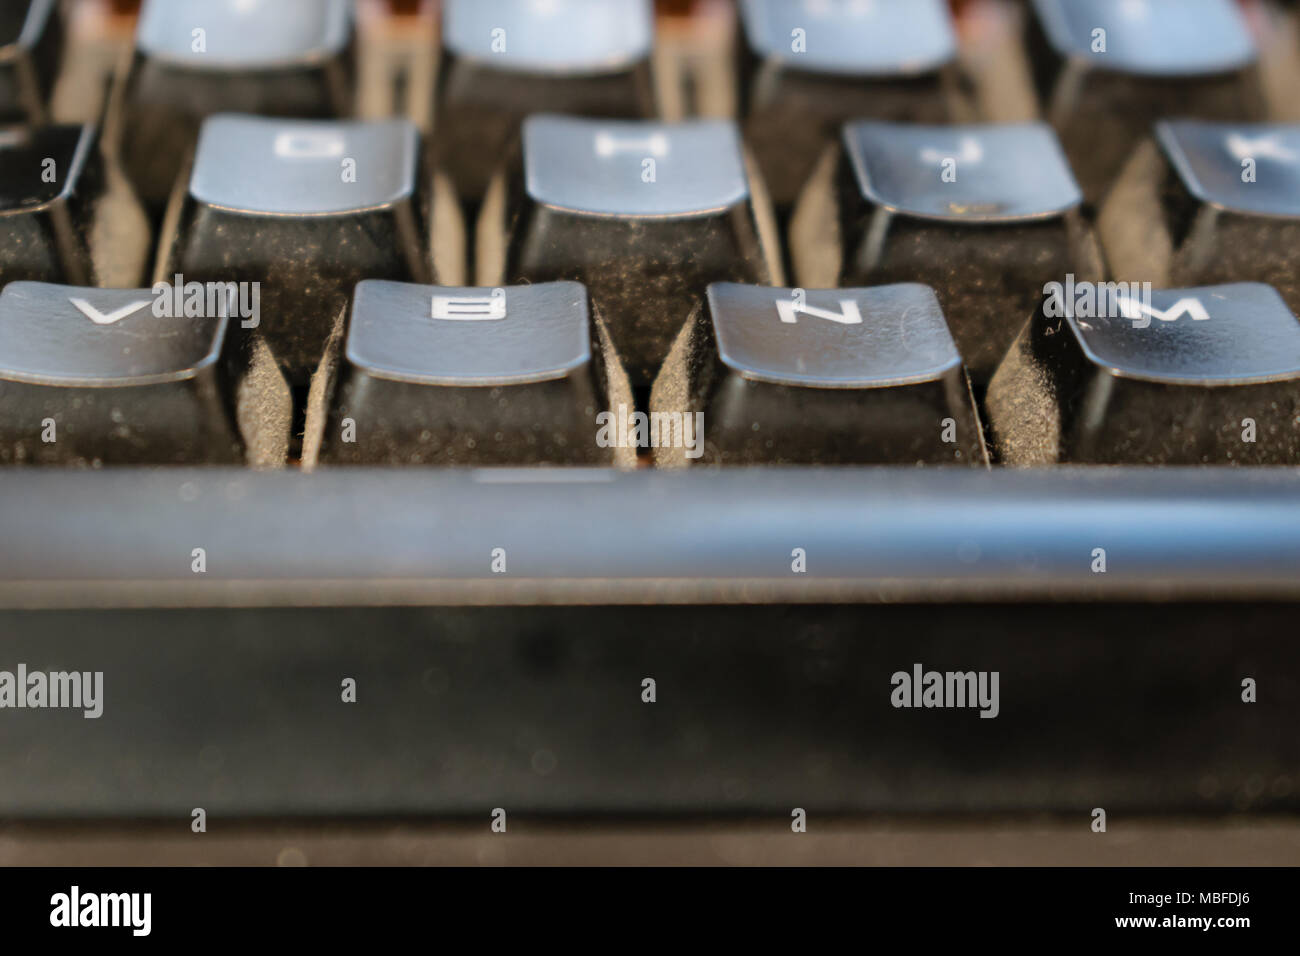 Dirty keyboard keys close up, health, hygiene hazard Stock Photo